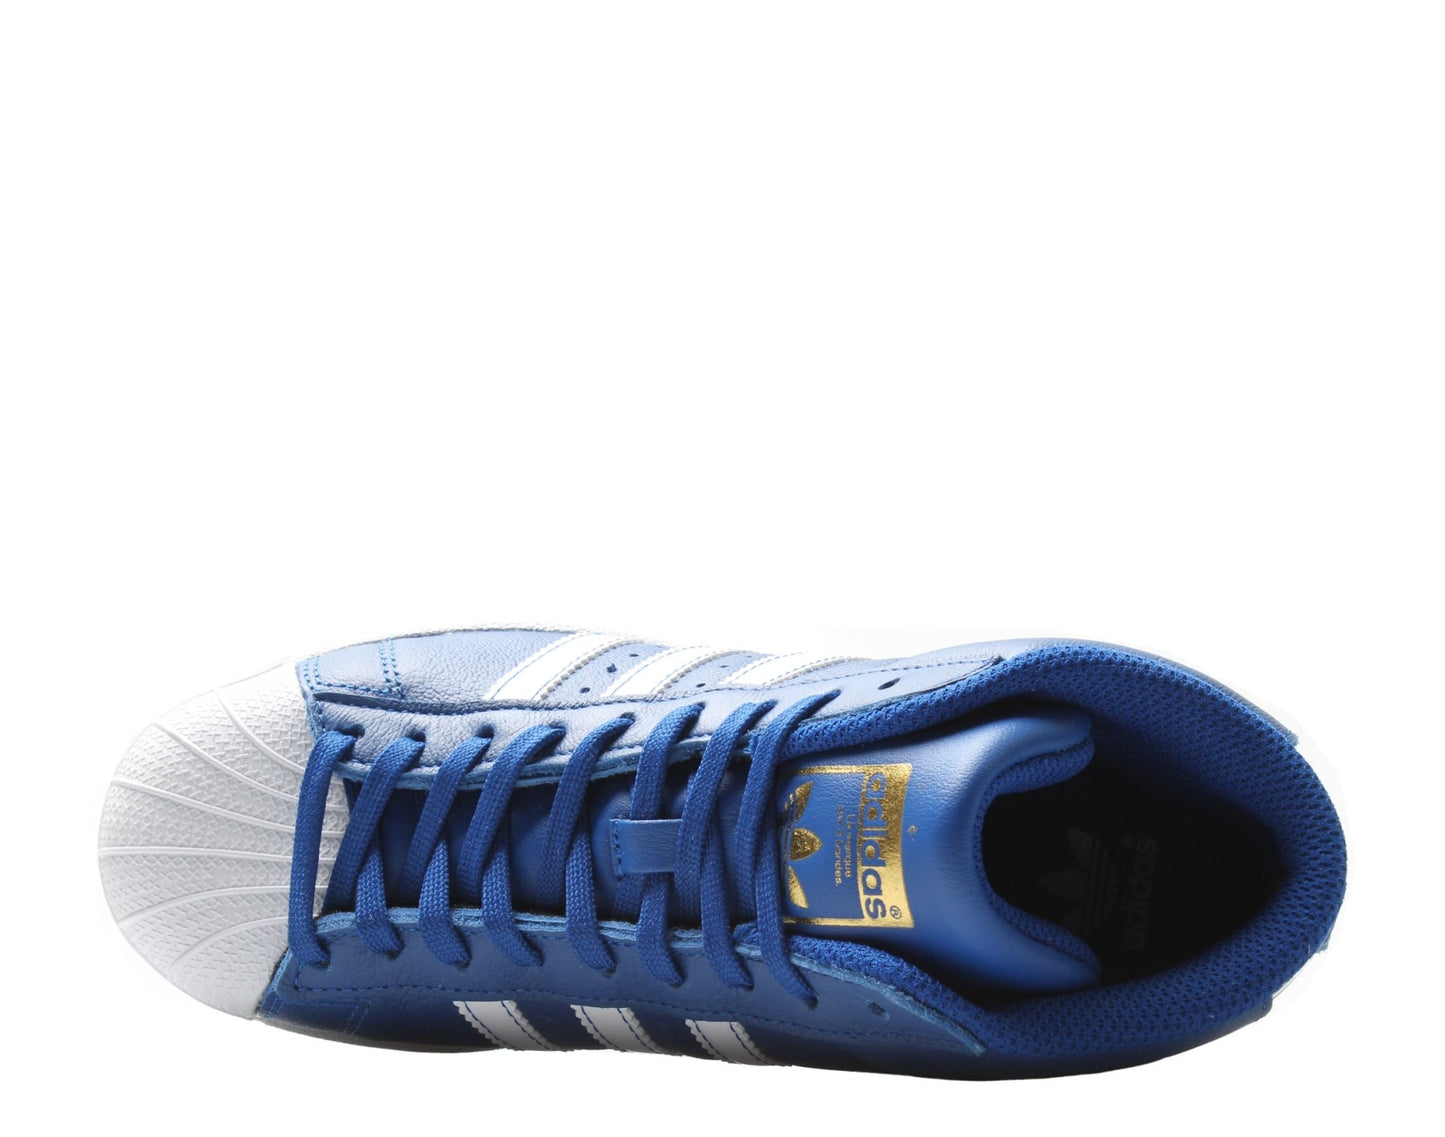 Adidas Originals Pro Model J Royal/White/Gold Big Kids Basketball Shoes BY3731 - Becauze